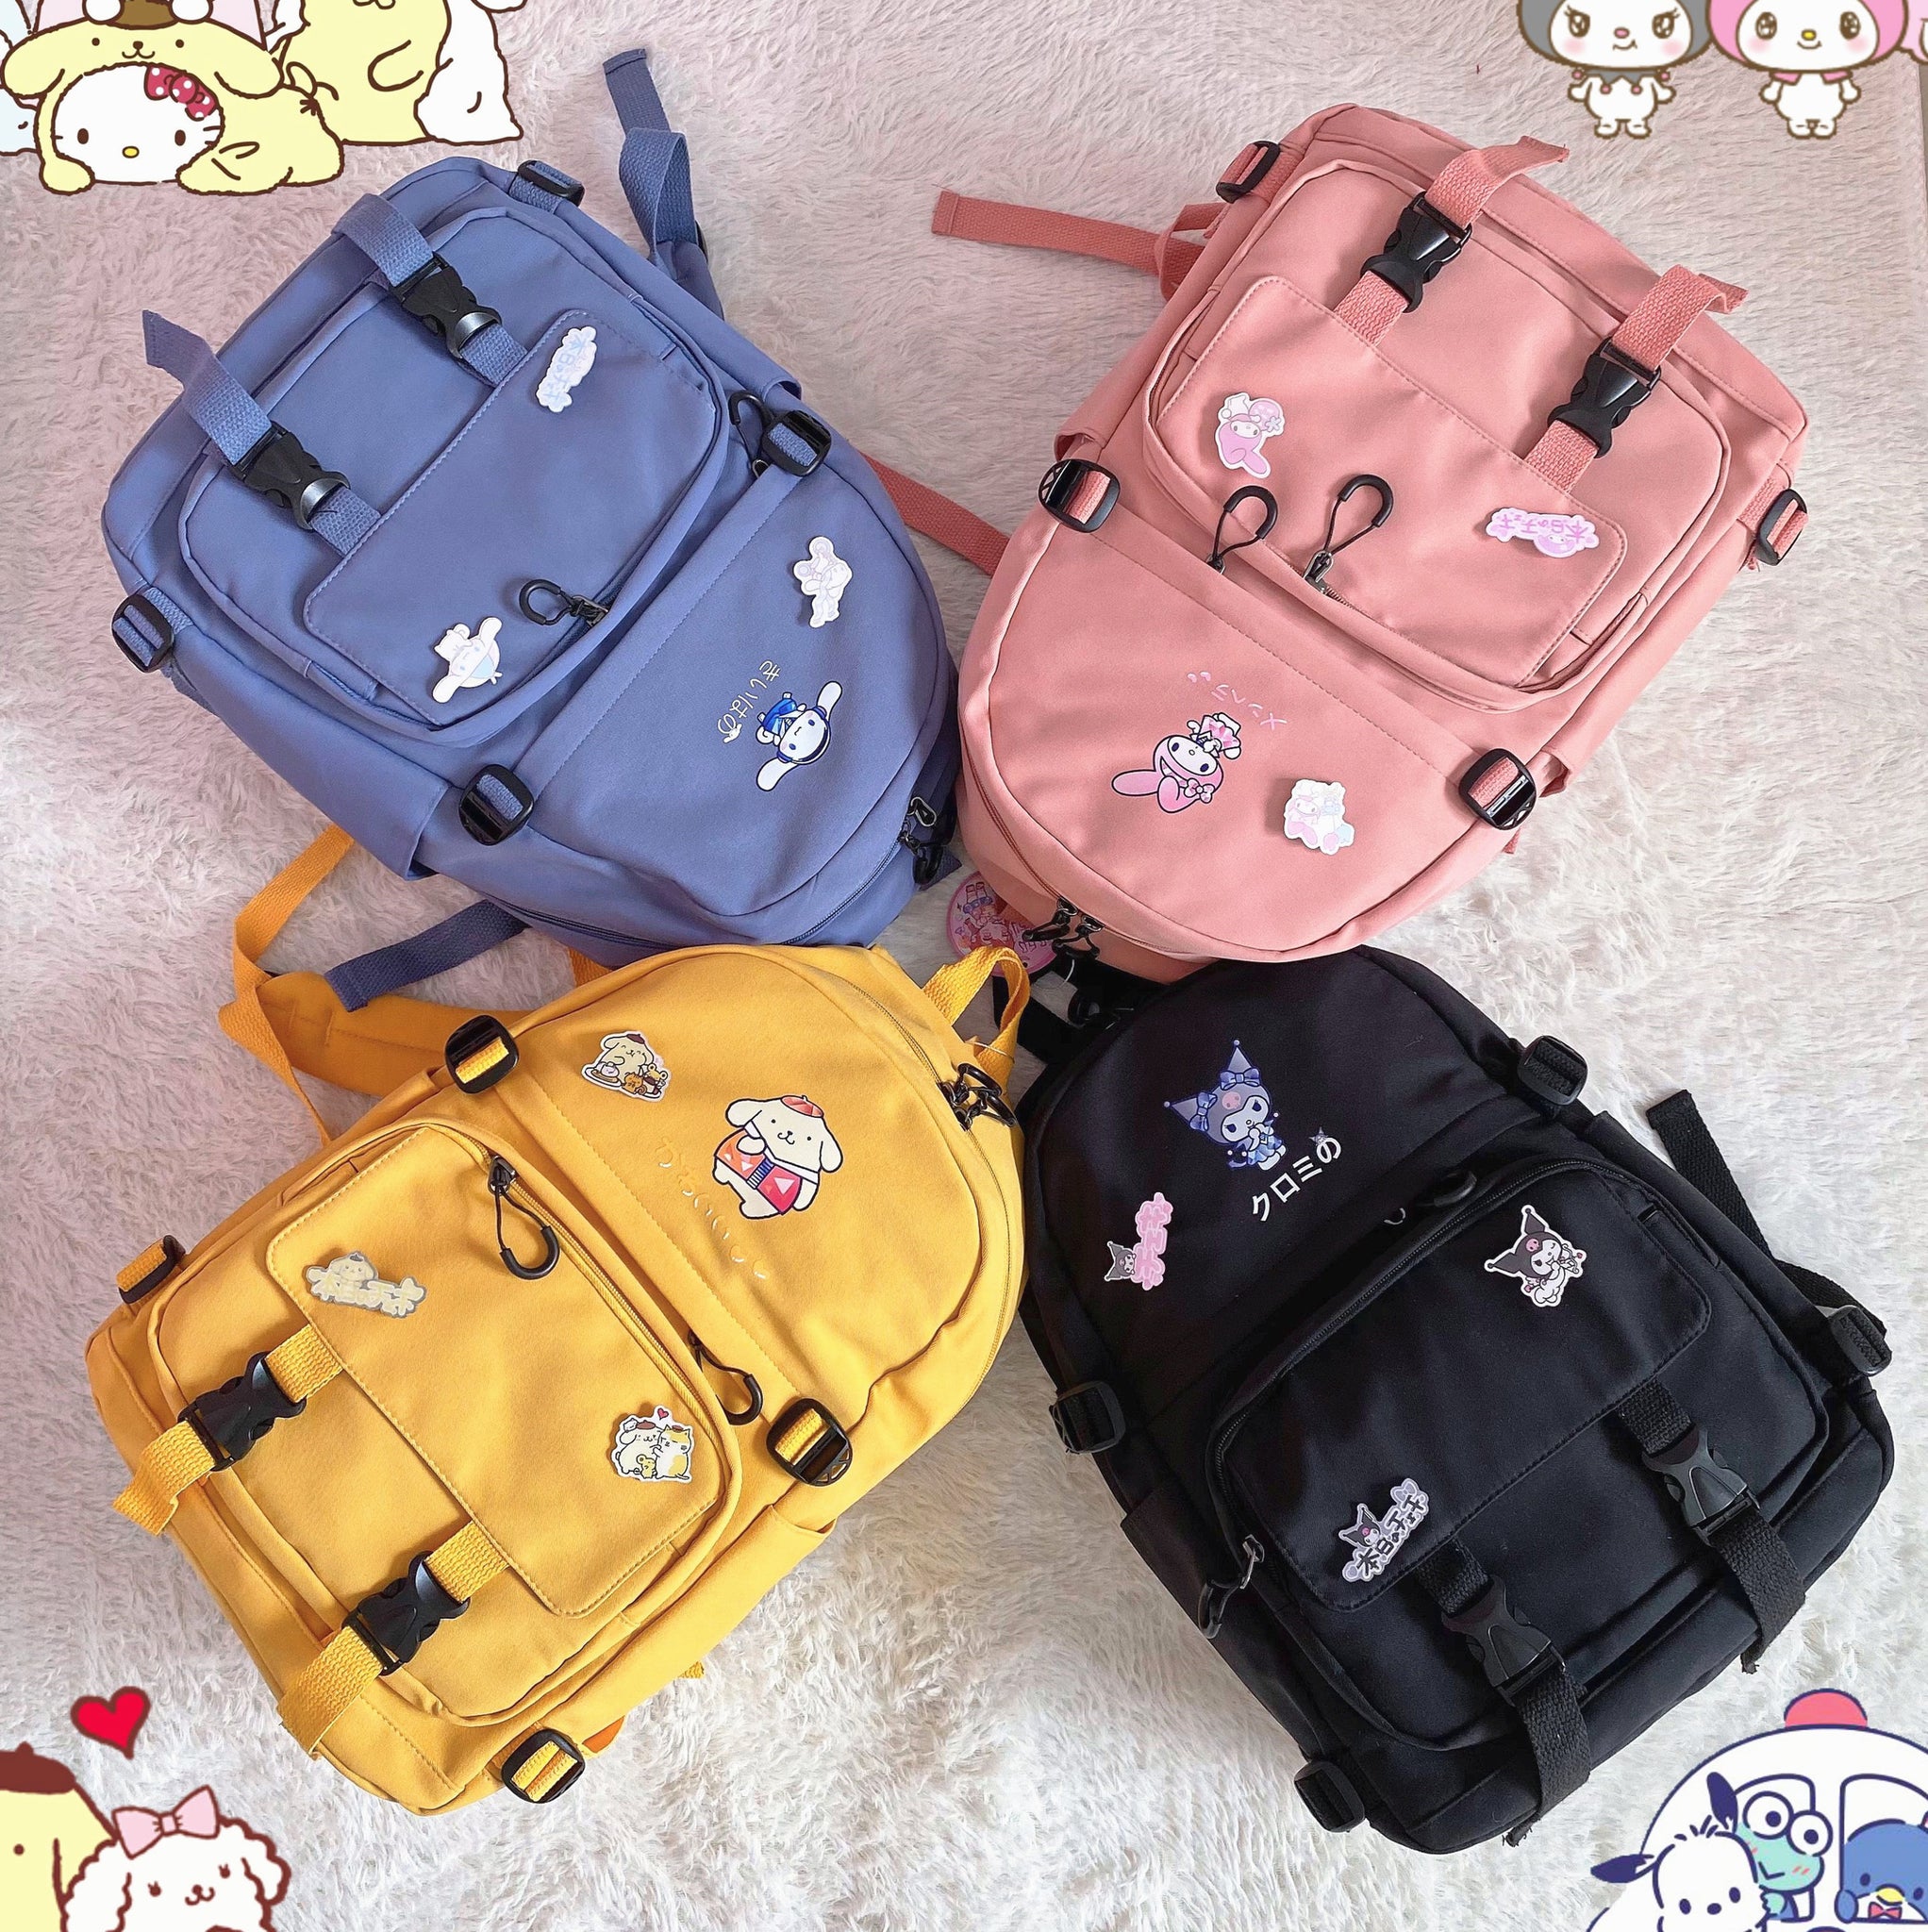 Anime Black Butler Backpack School Bags For Teenagers Cartoon Unisex Bookbag  Zipper Student USB Travel Laptop Shoulders Bags - AliExpress